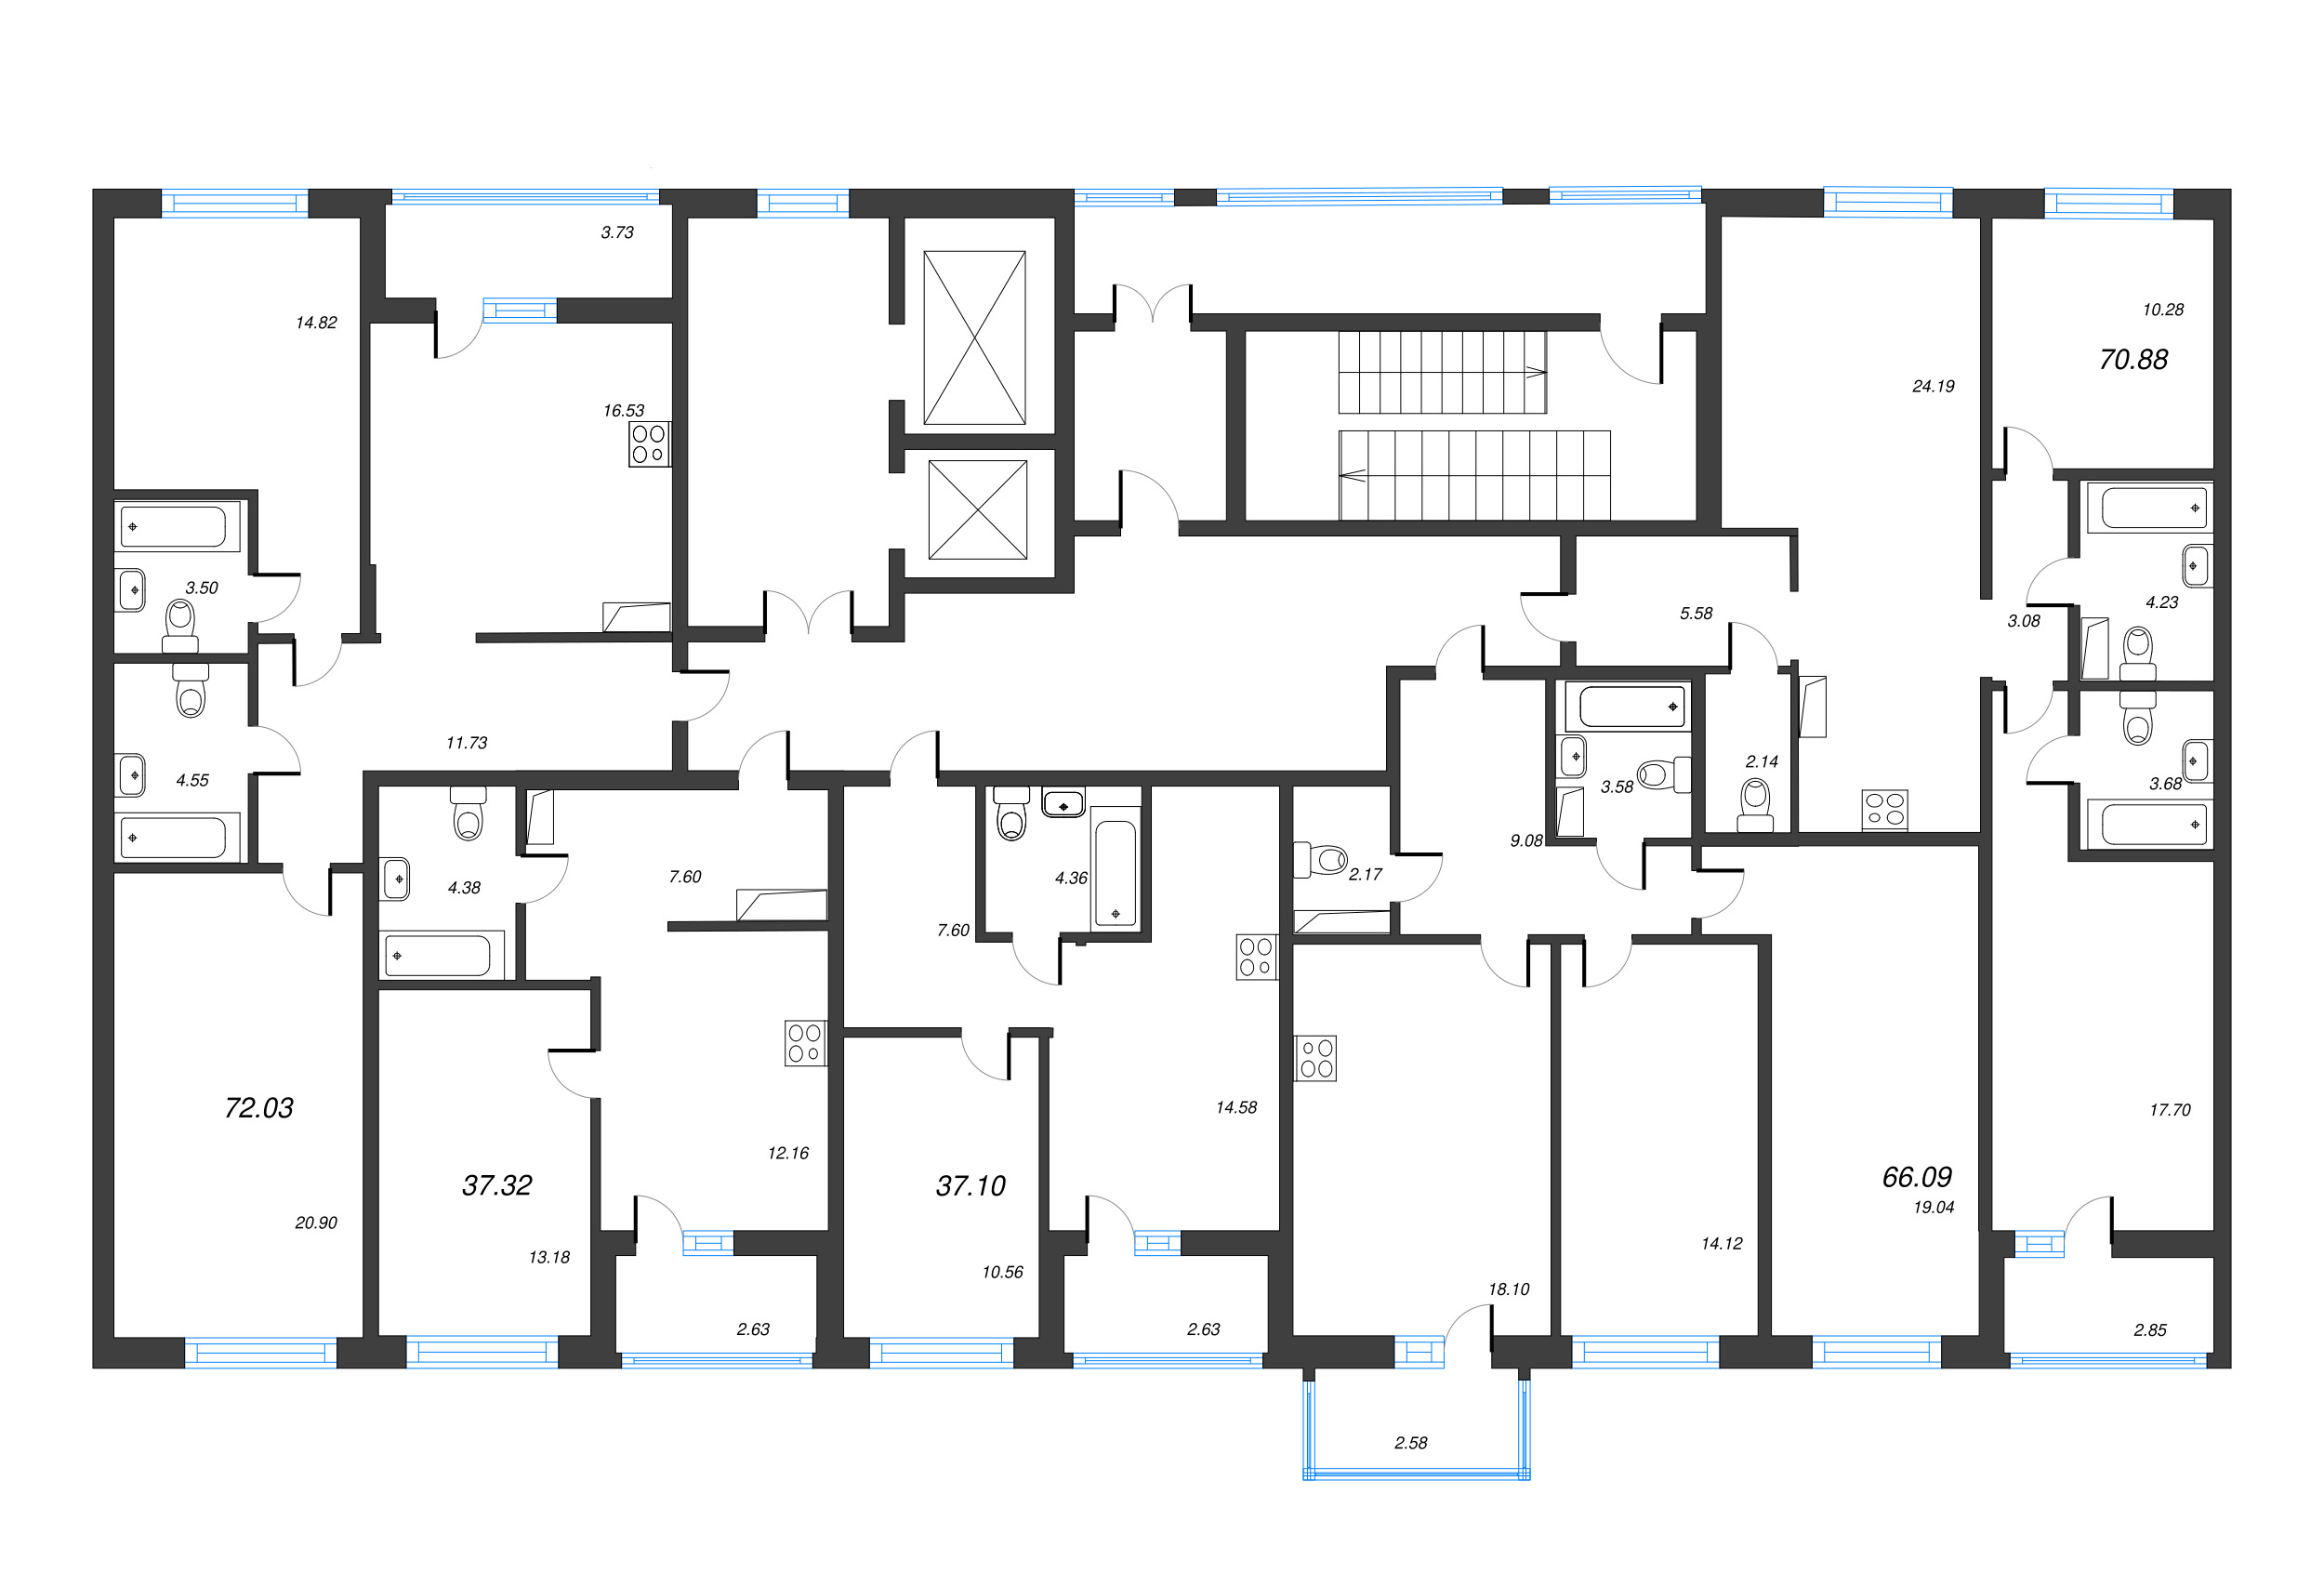 3-комнатная (Евро) квартира, 66.09 м² - планировка этажа